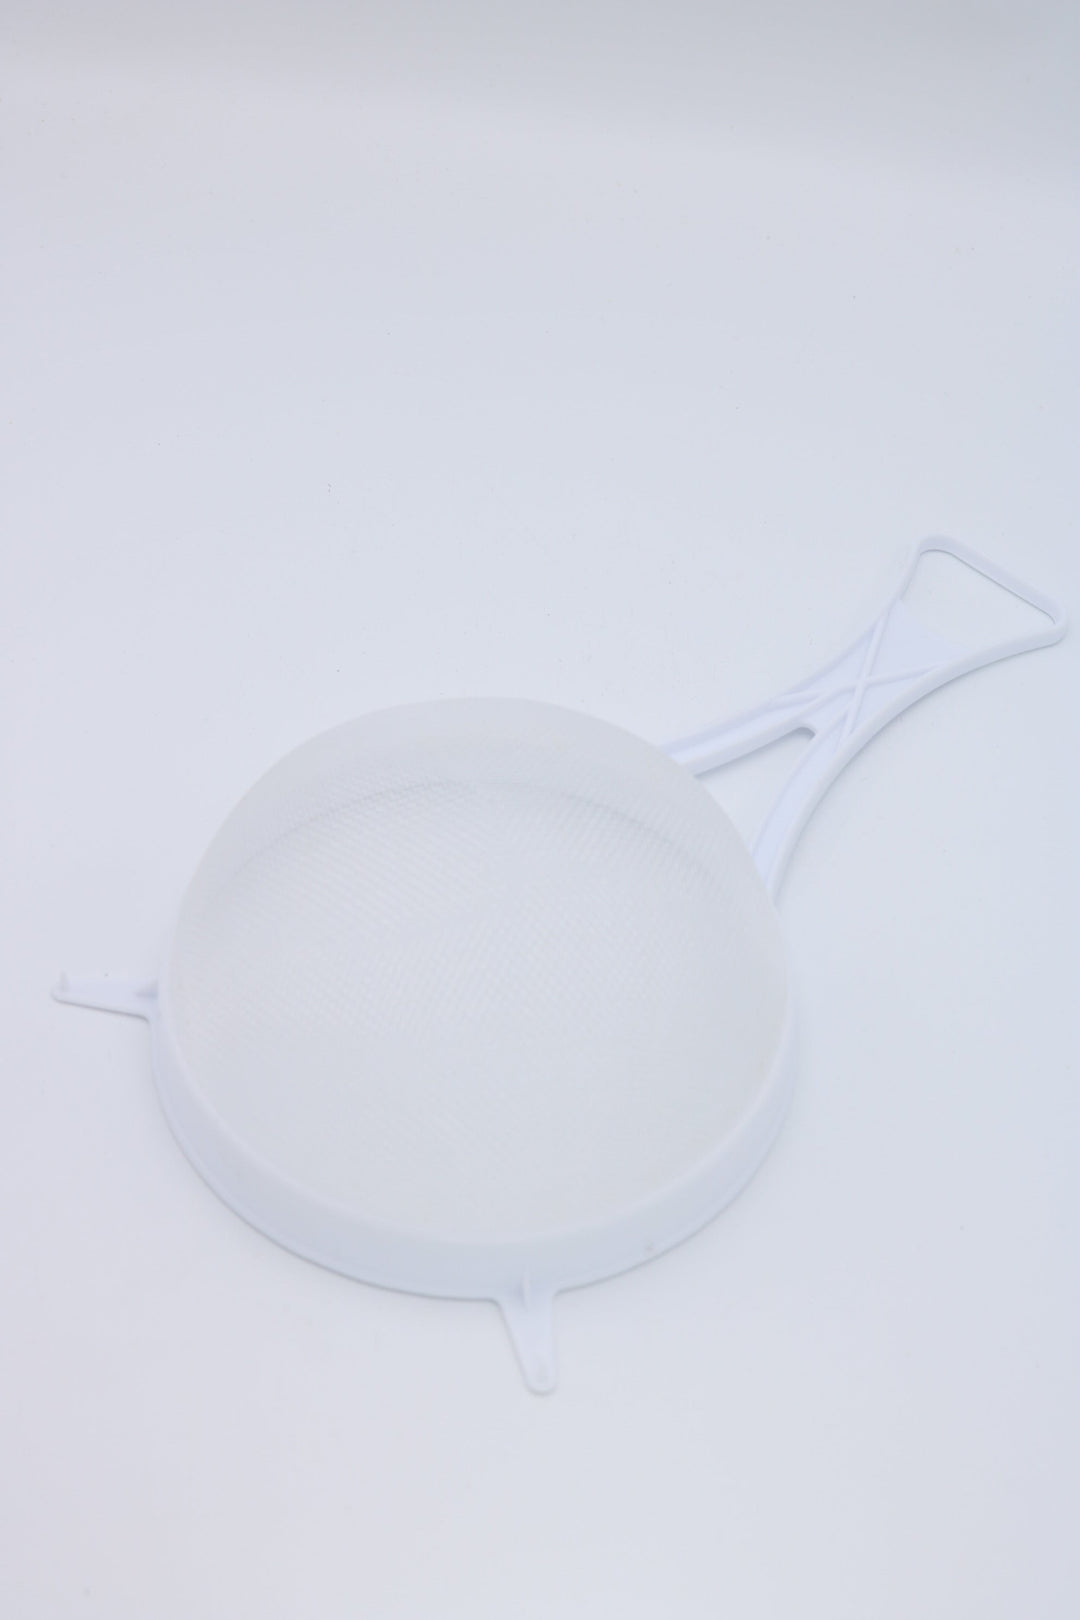 Plastic zeef - Ø 15 cm